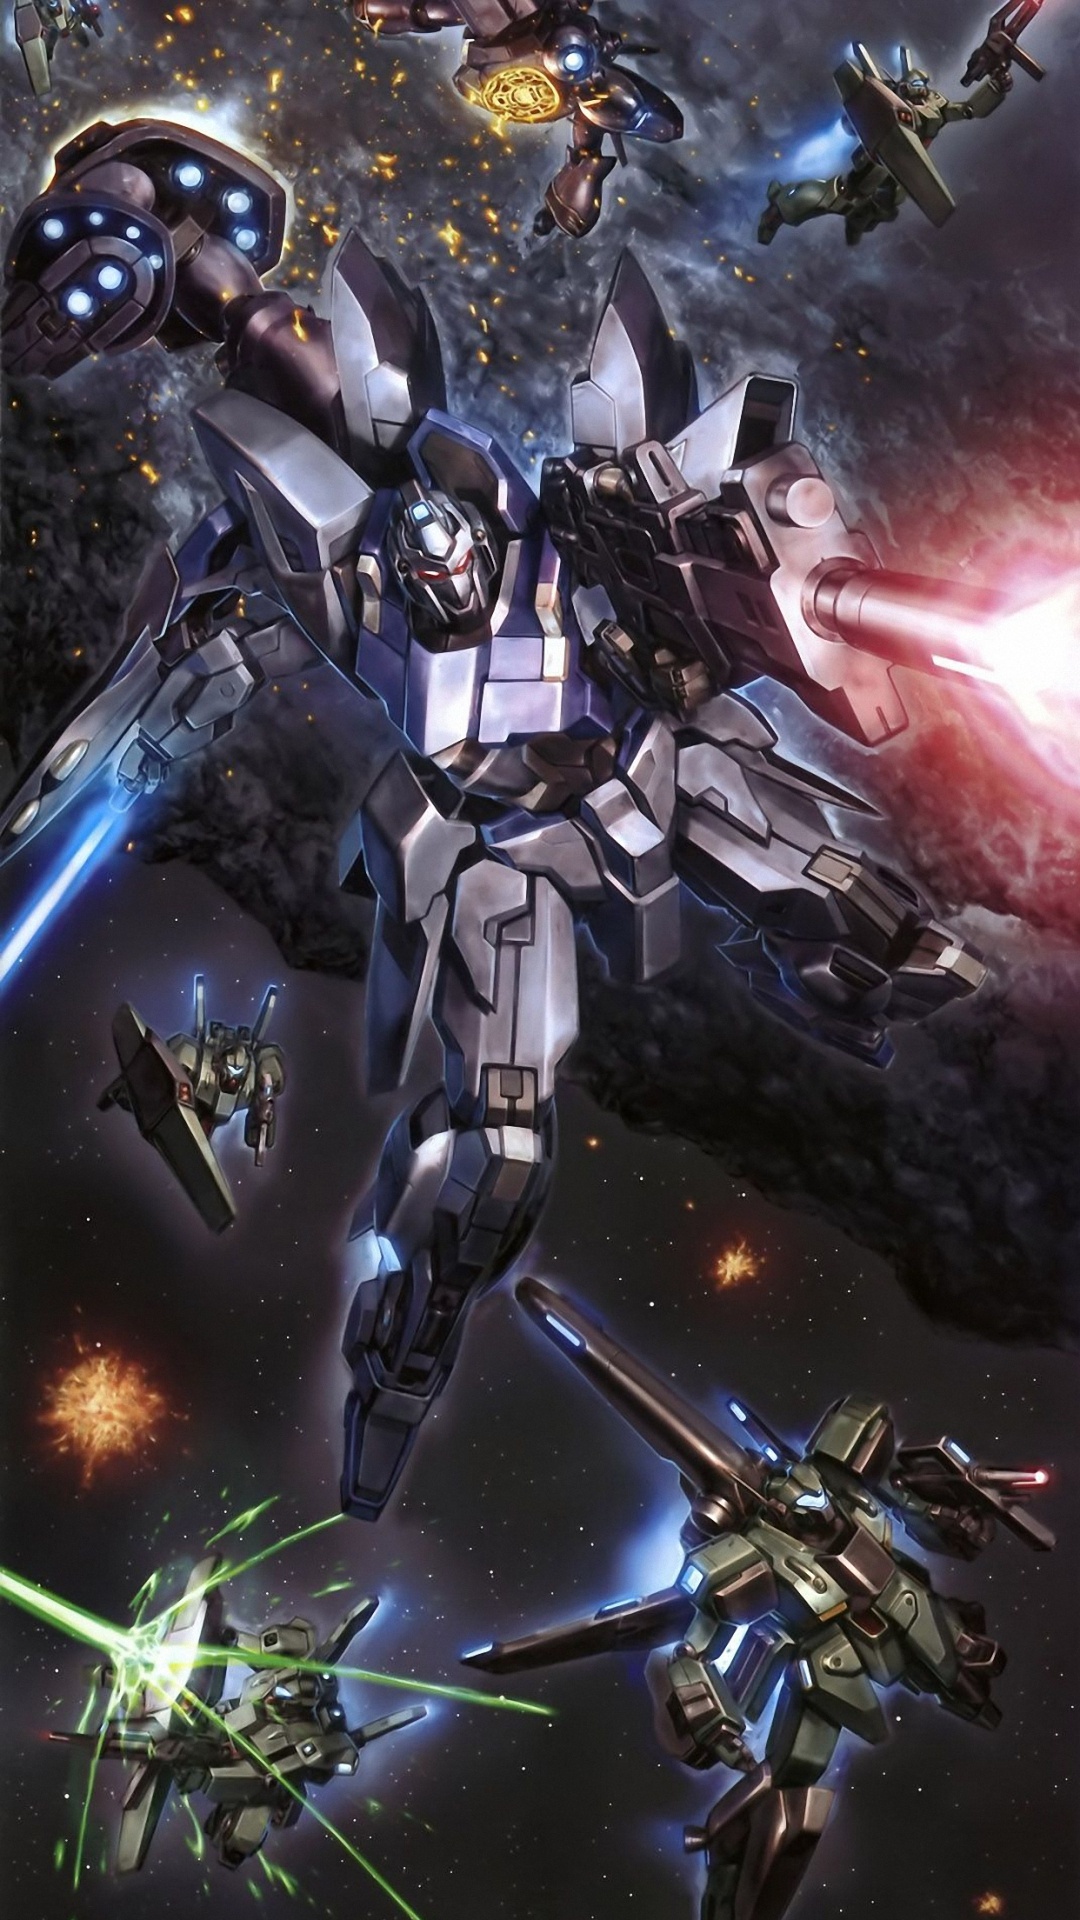 Gundam mobile suits, Epic robot clashes, Anime artistry, Futuristic mecha, 1080x1920 Full HD Phone